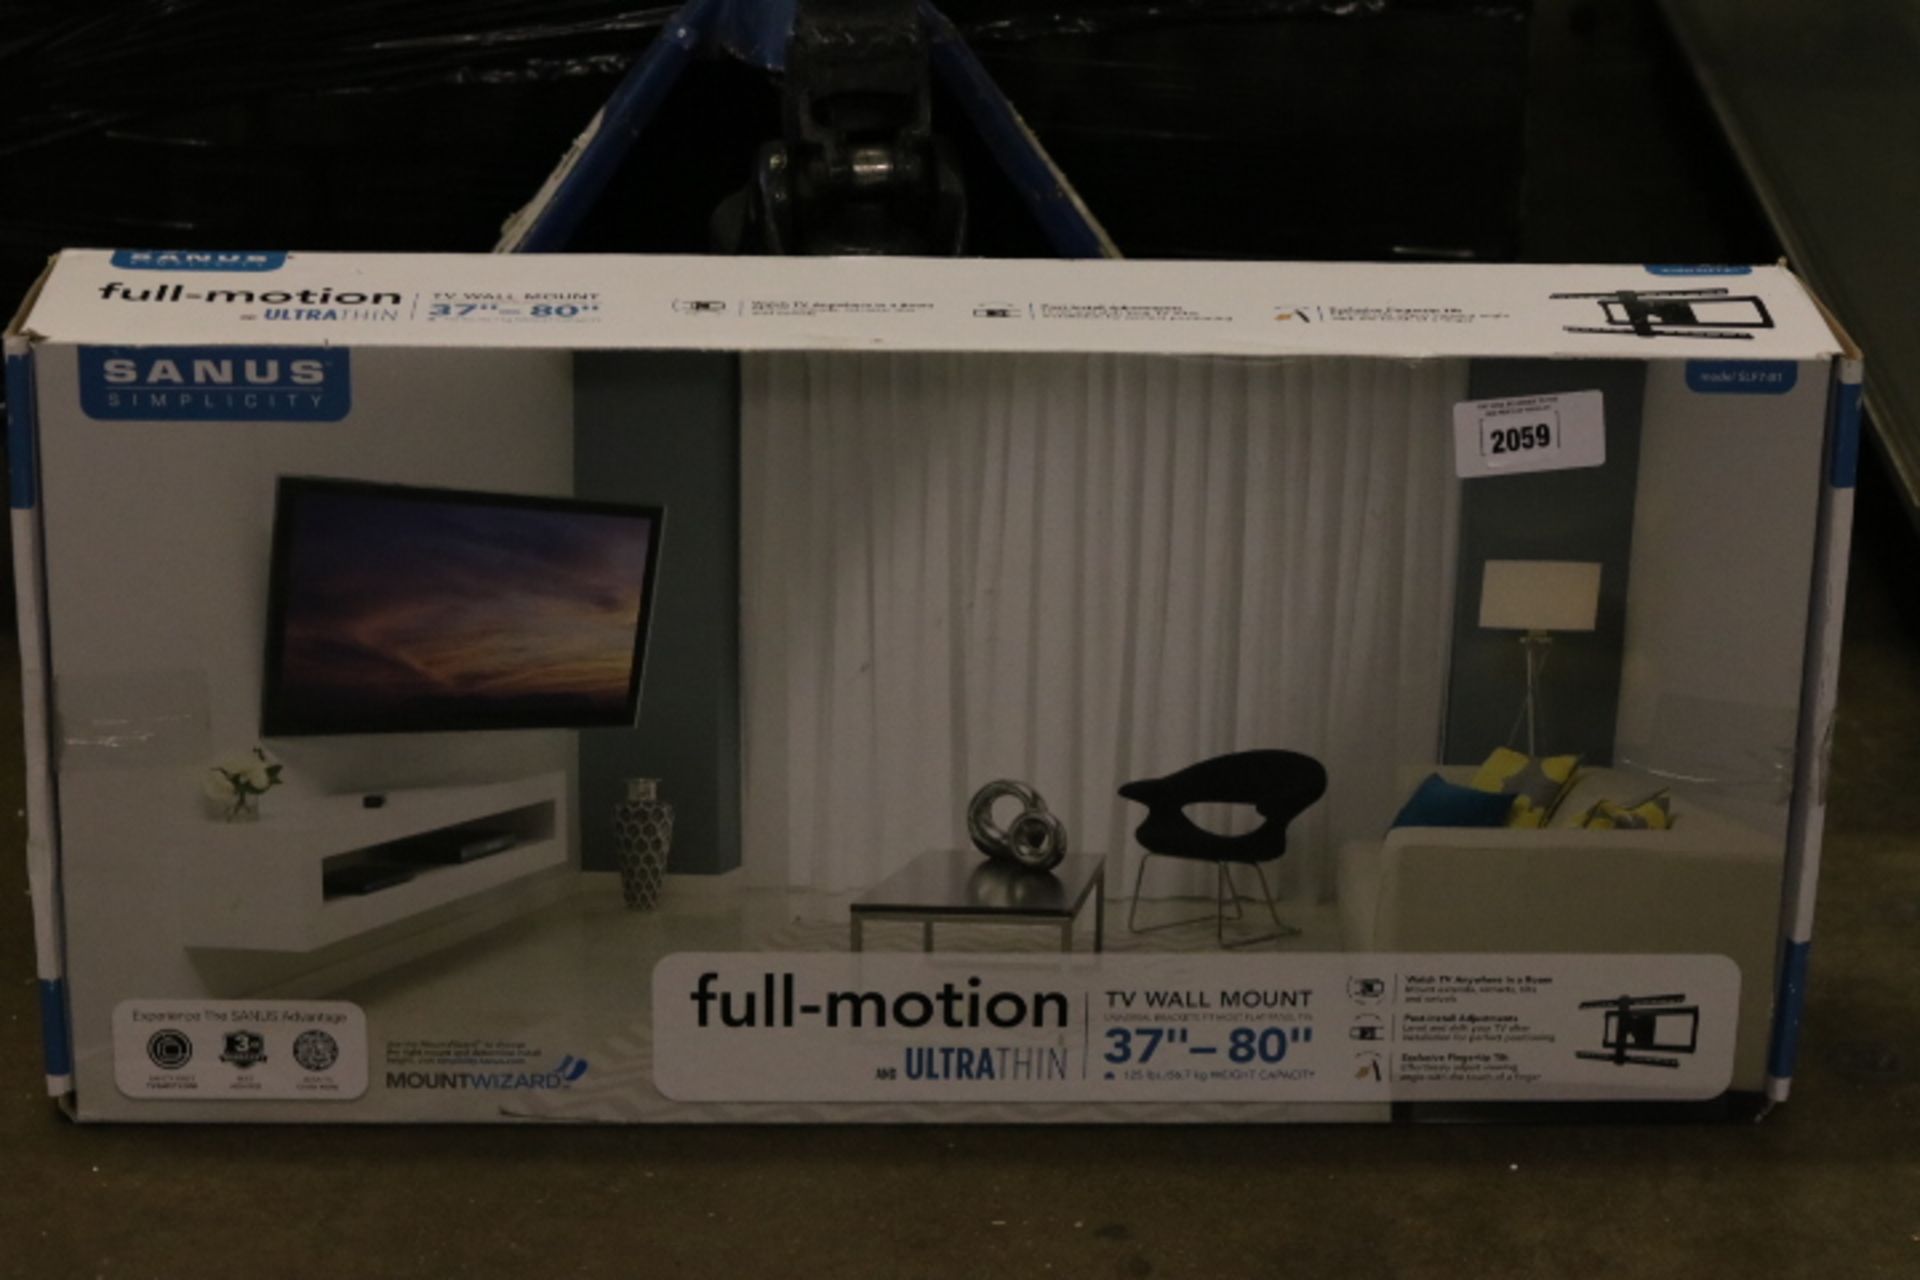 Sanus free motion TV wall mount for 37 - 80'' TV's